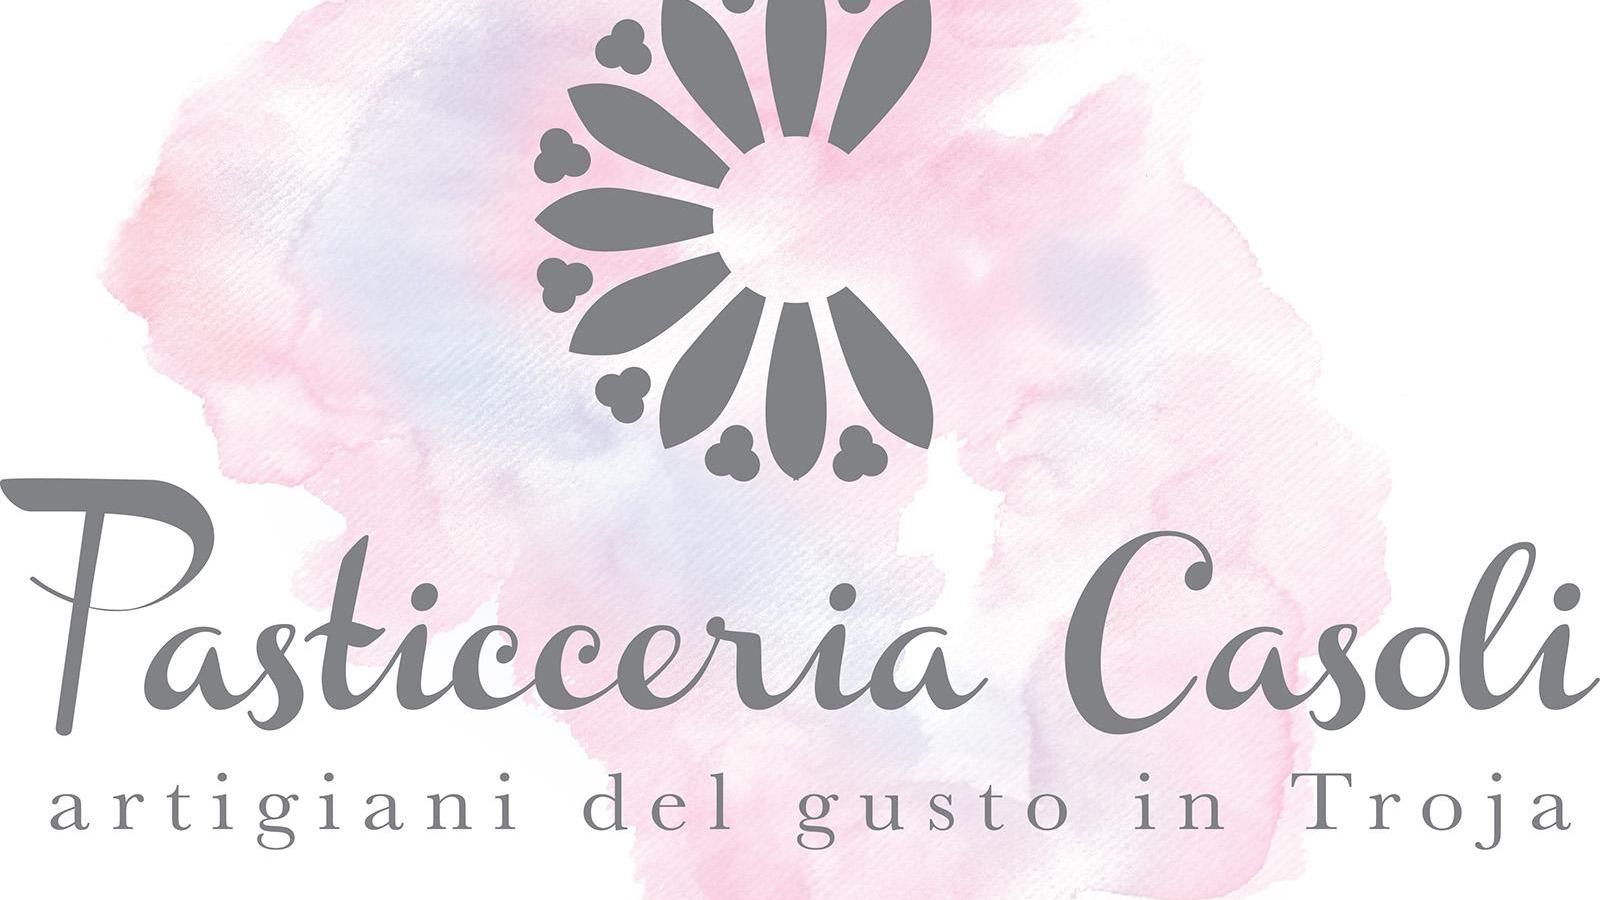 Pasticceria Casoli - Pasticceria Casoli | Localtourism.it